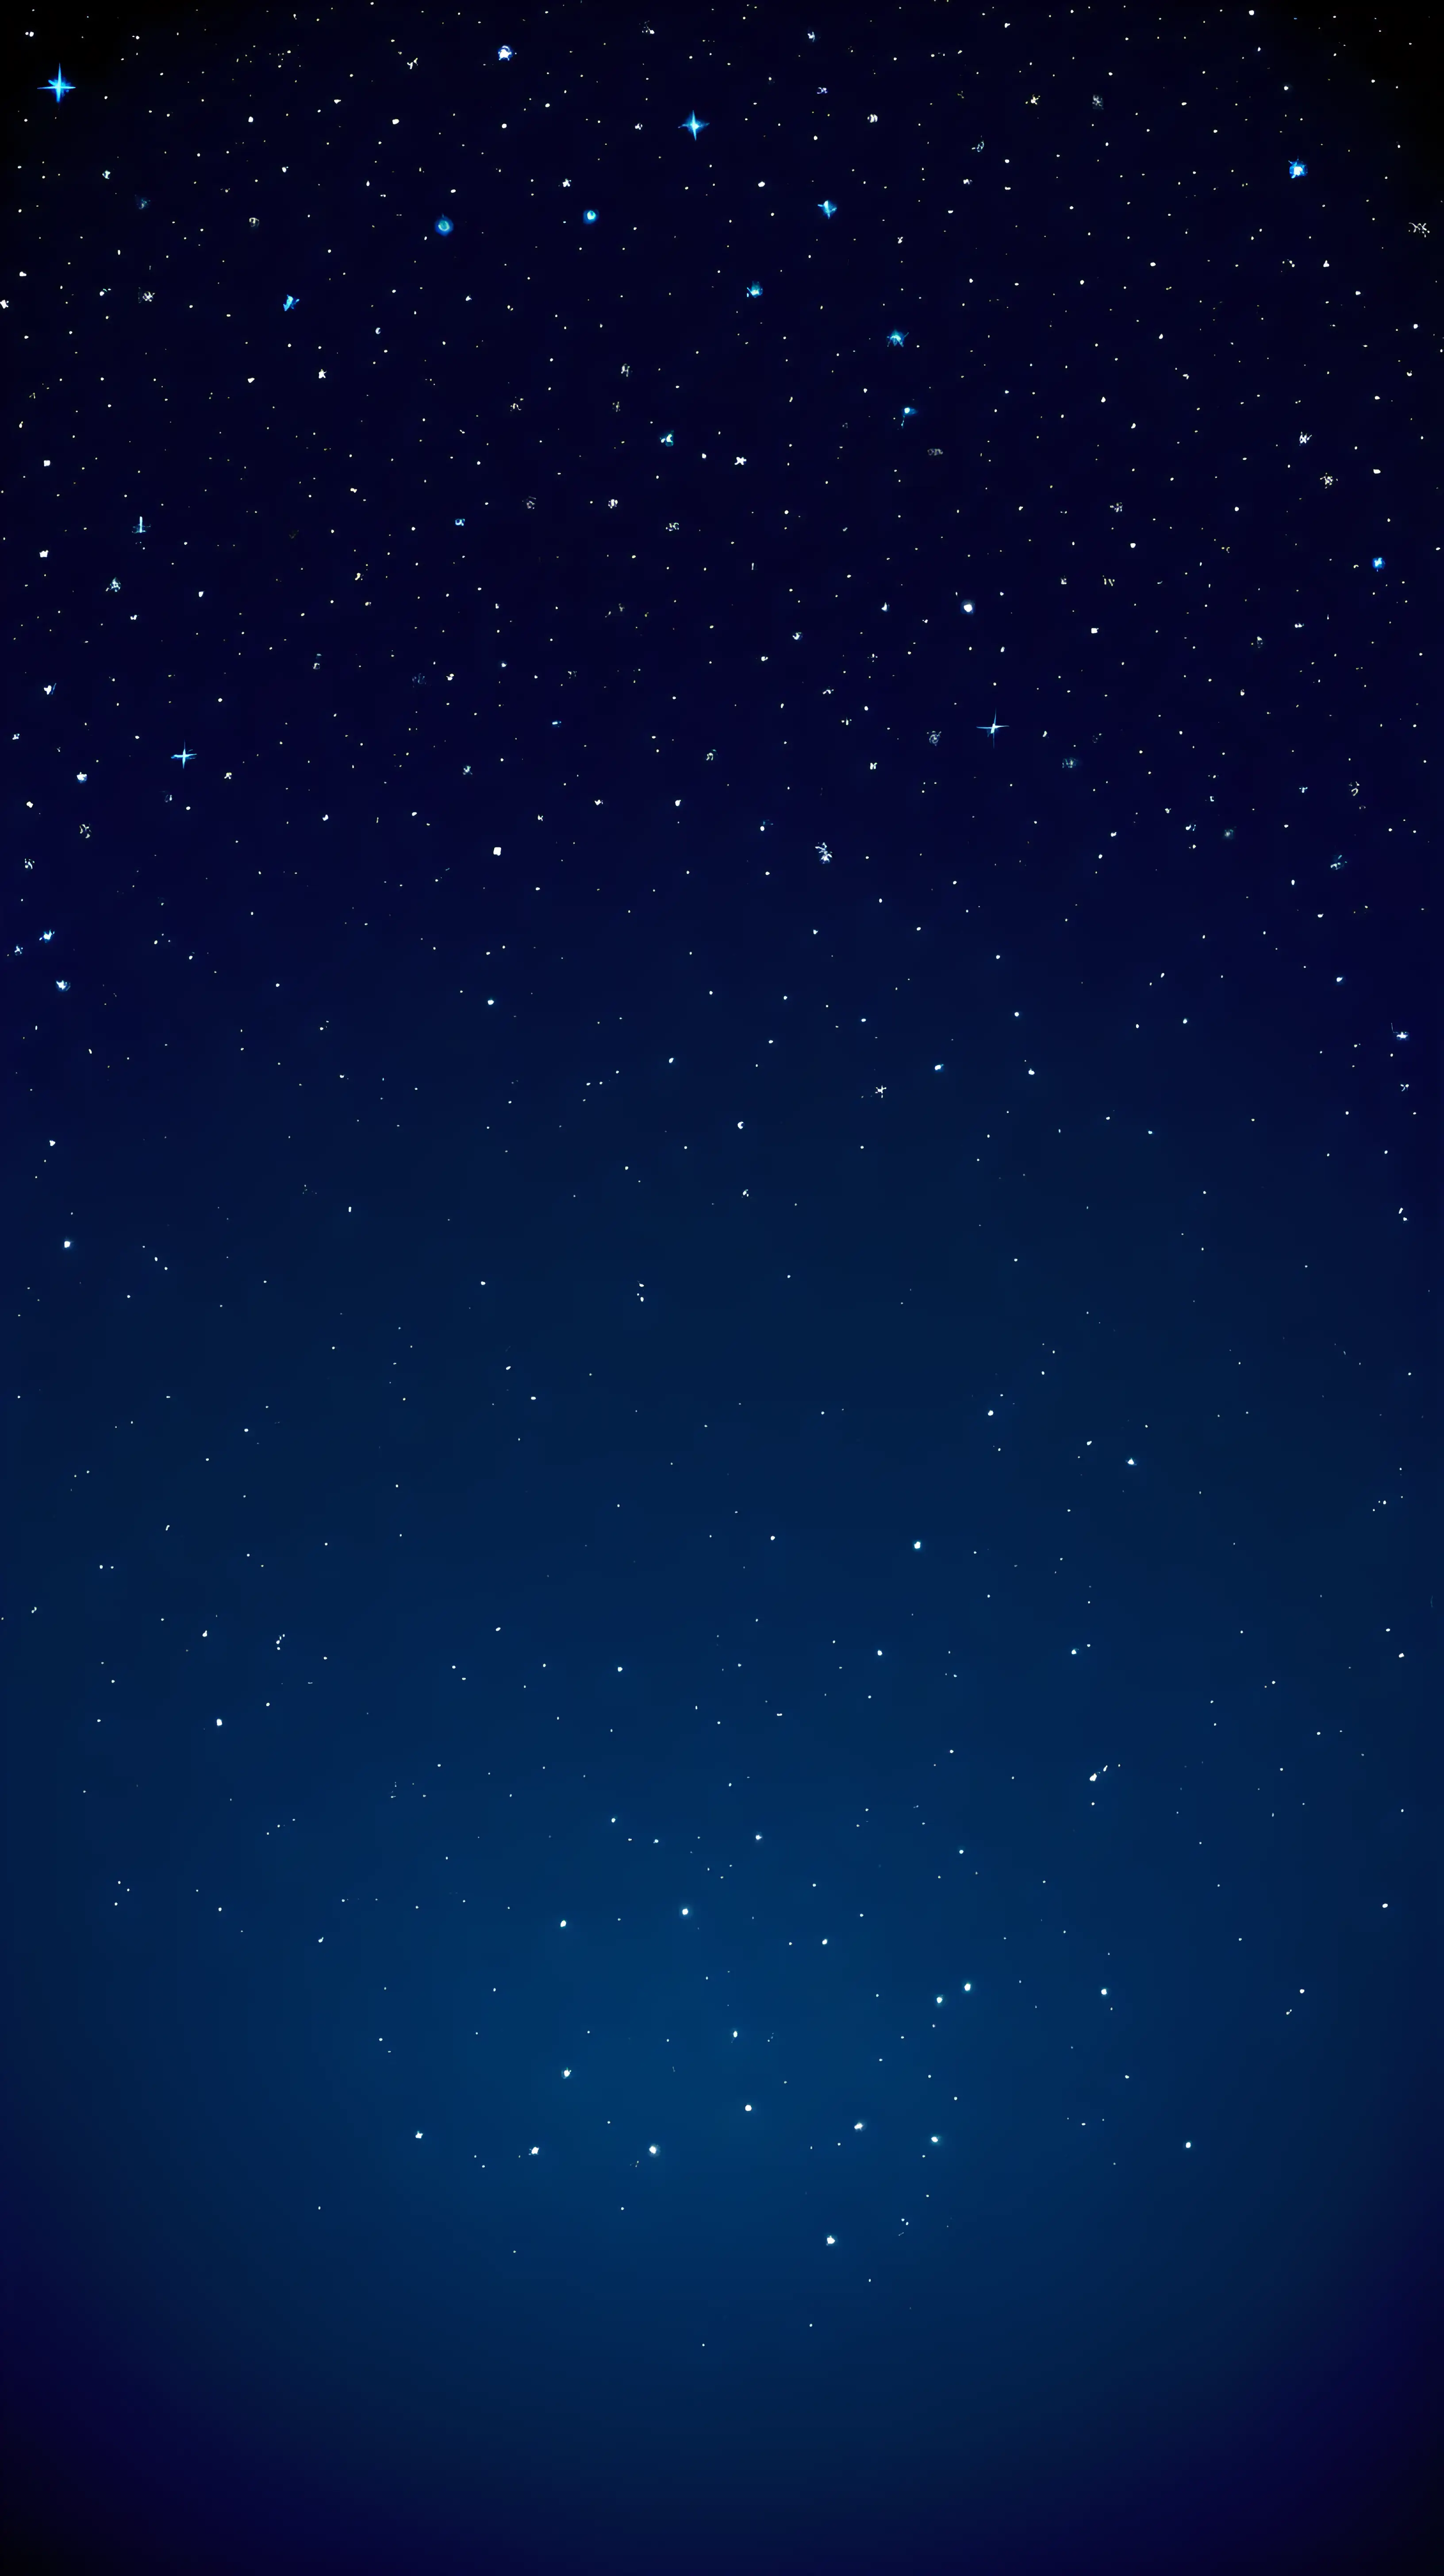 Starry Night Sky in Enchanting Pixar Style